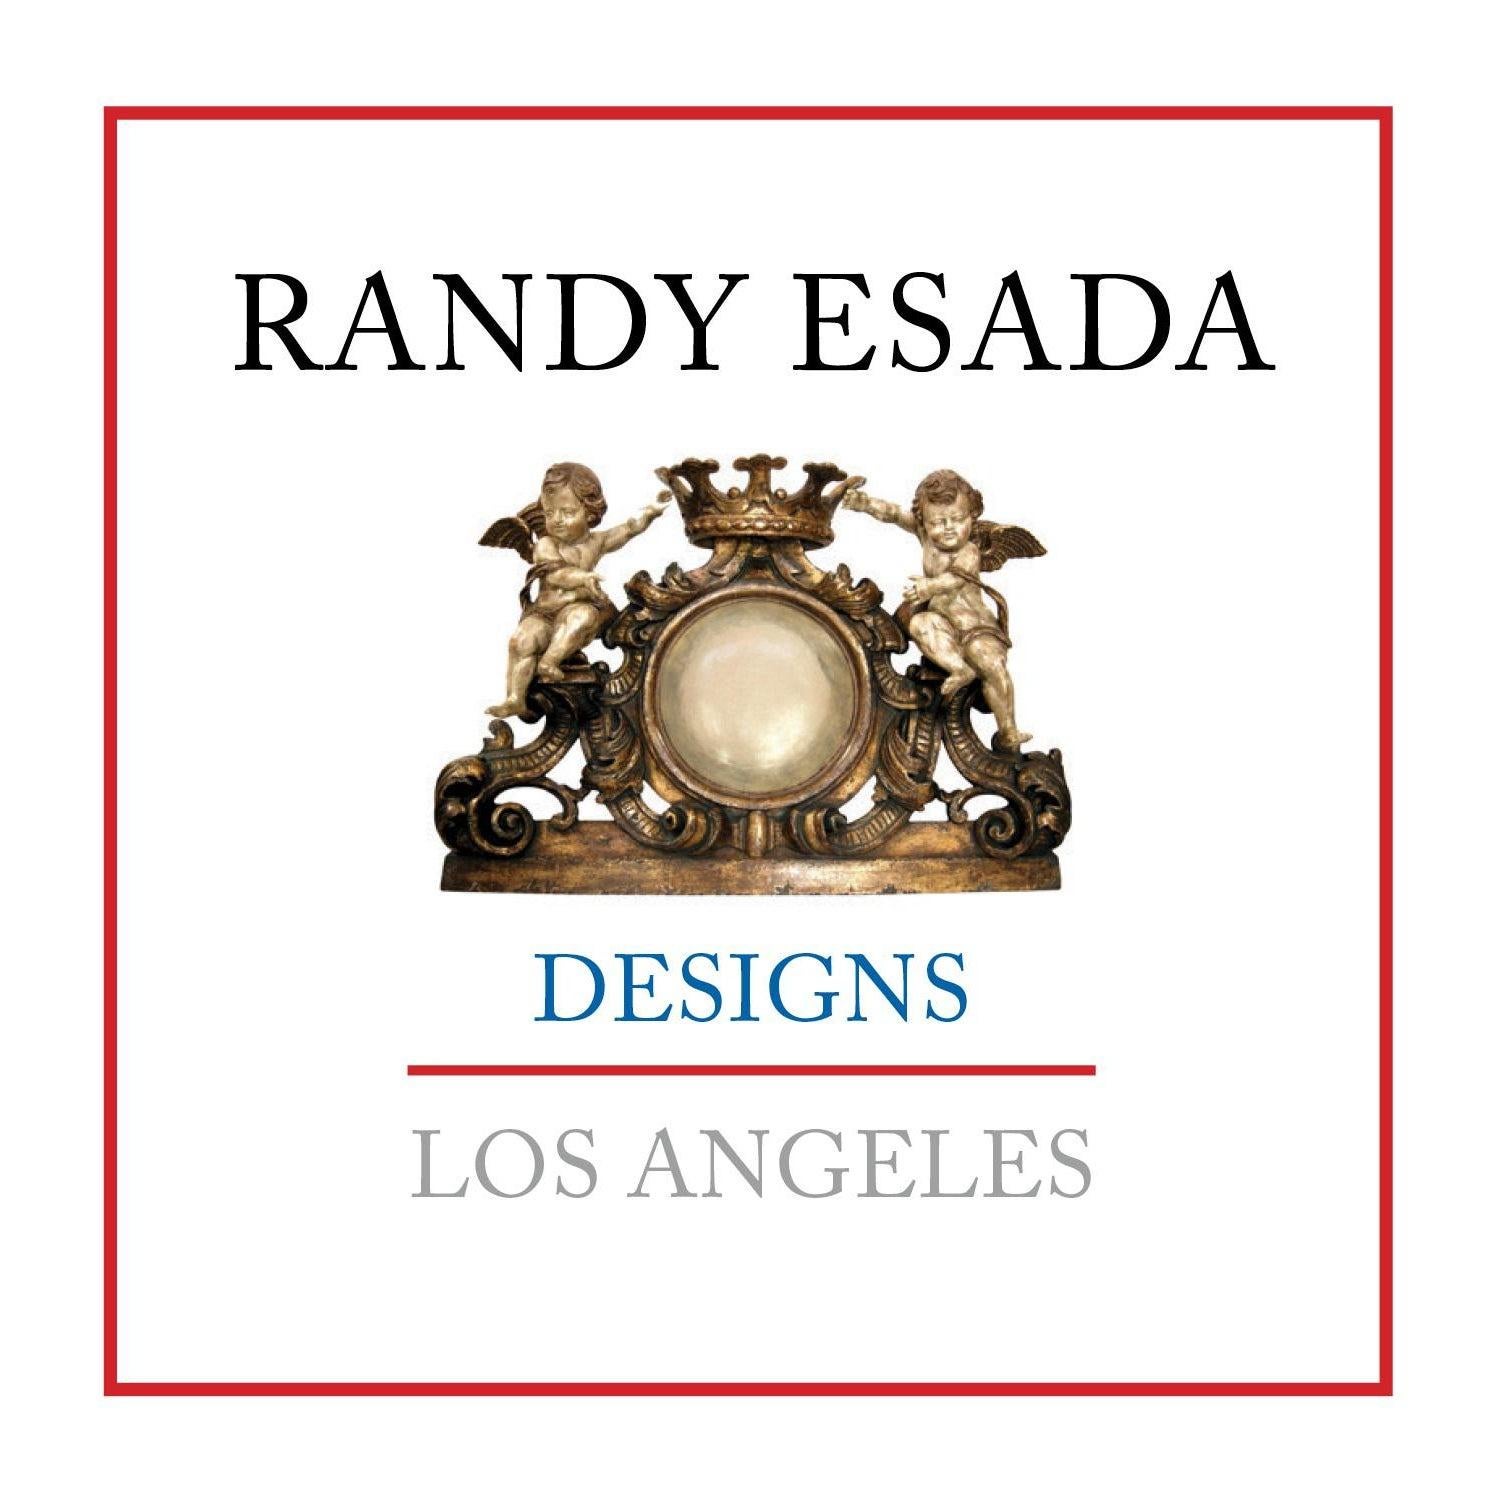 Italian designer Venetian rope table lamp by Randy Esada

White gold giltwood finish.